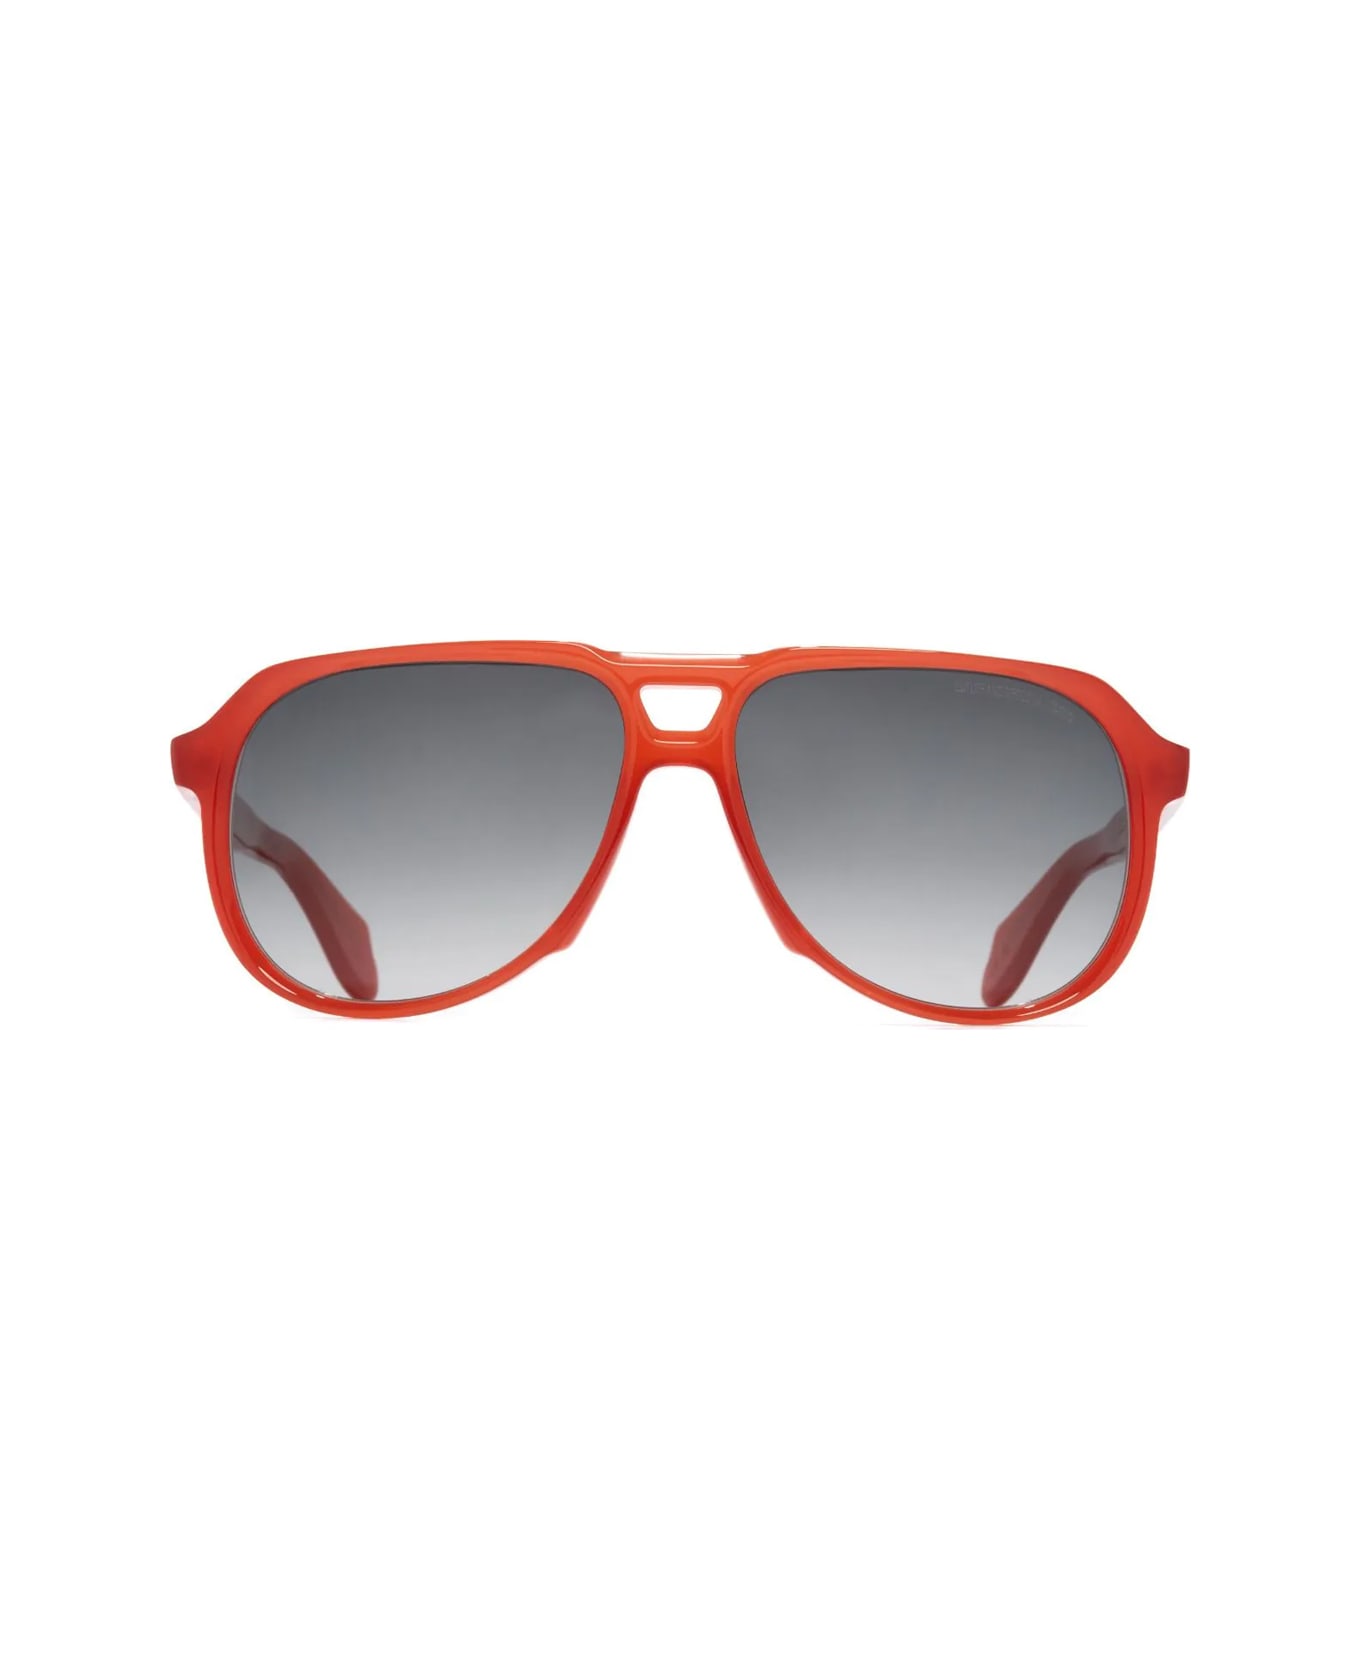 Cutler and Gross 9782 B1 Sunglasses - Arancione